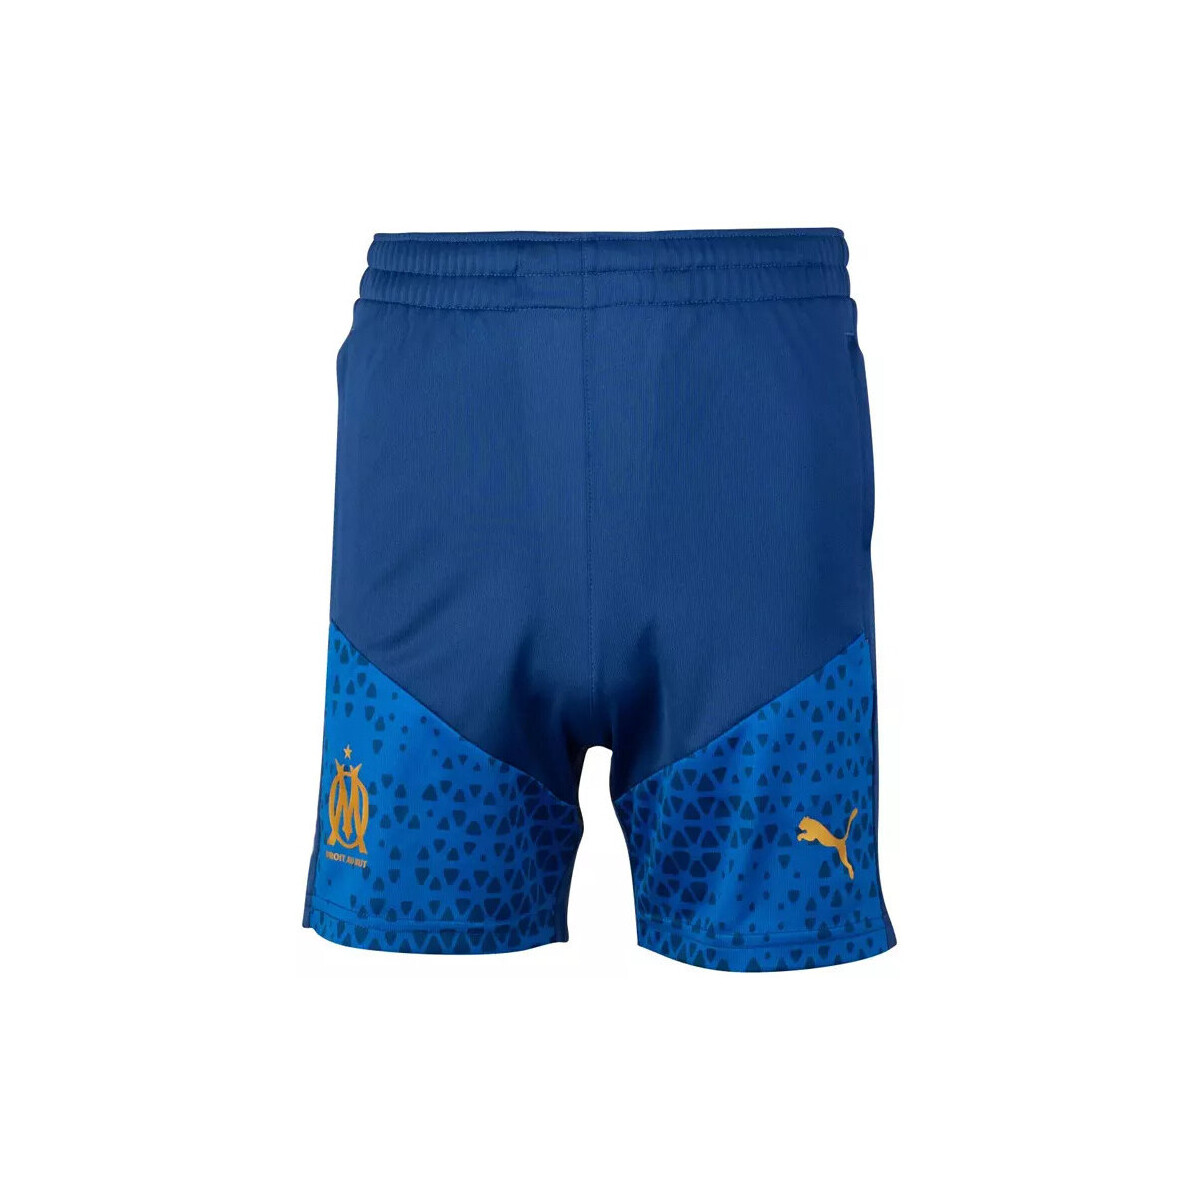 Vêtements Homme Shorts / Bermudas Puma OM TRG Bleu